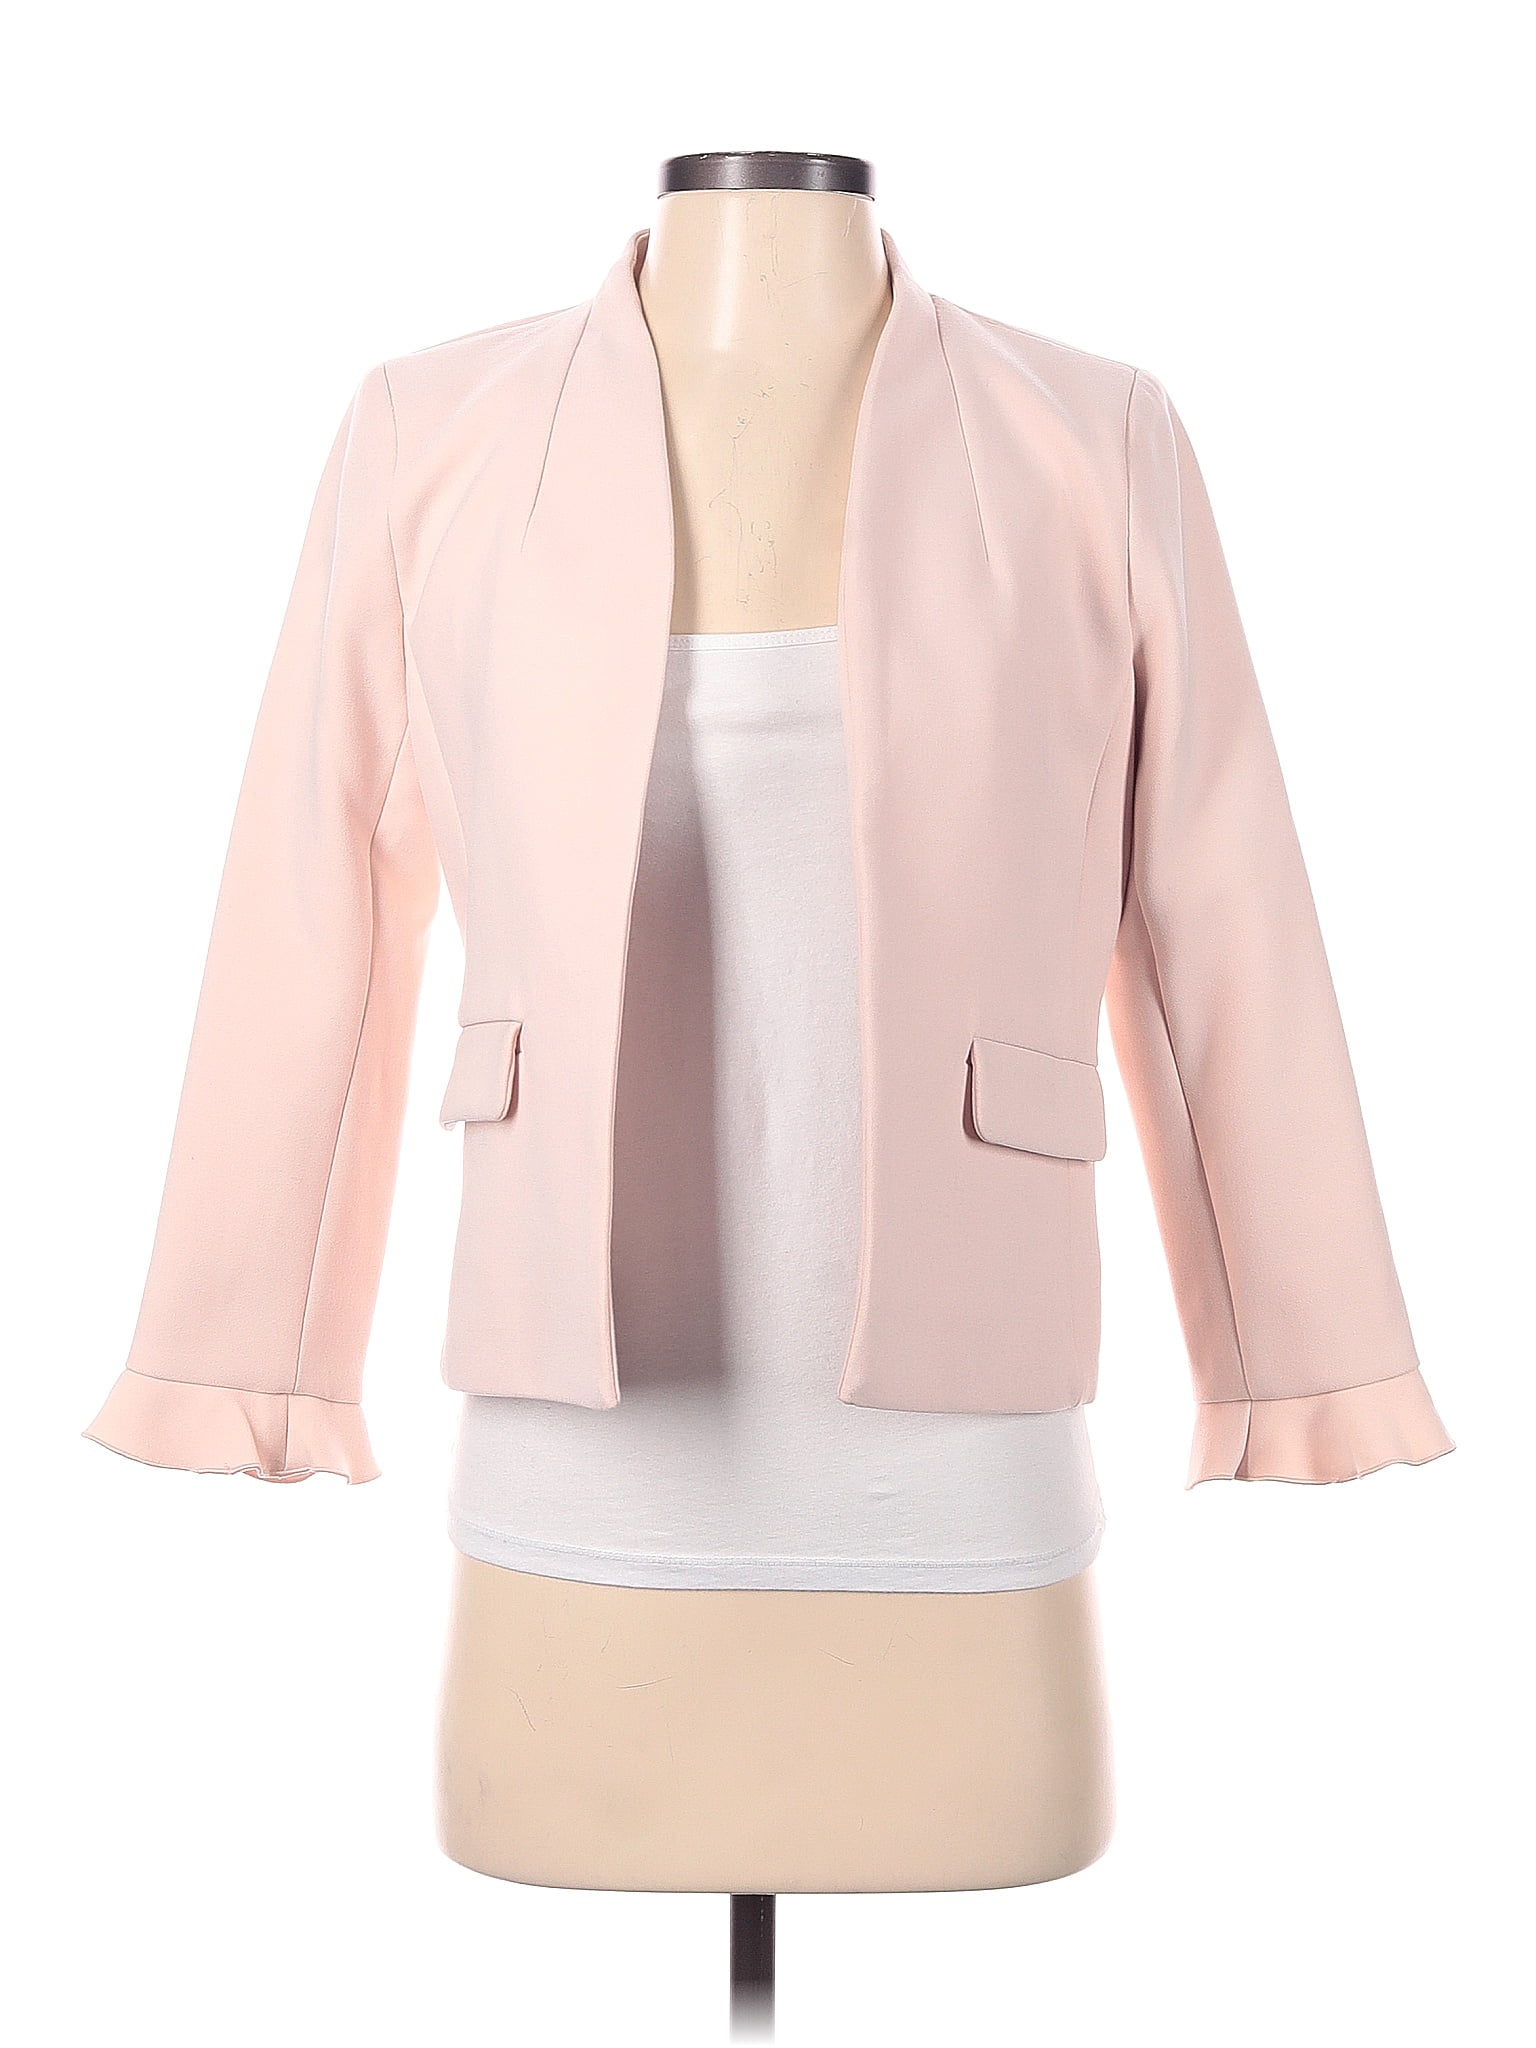 Ann Taylor Solid Pink Jacket Size 0 (Petite) - 75% off | thredUP